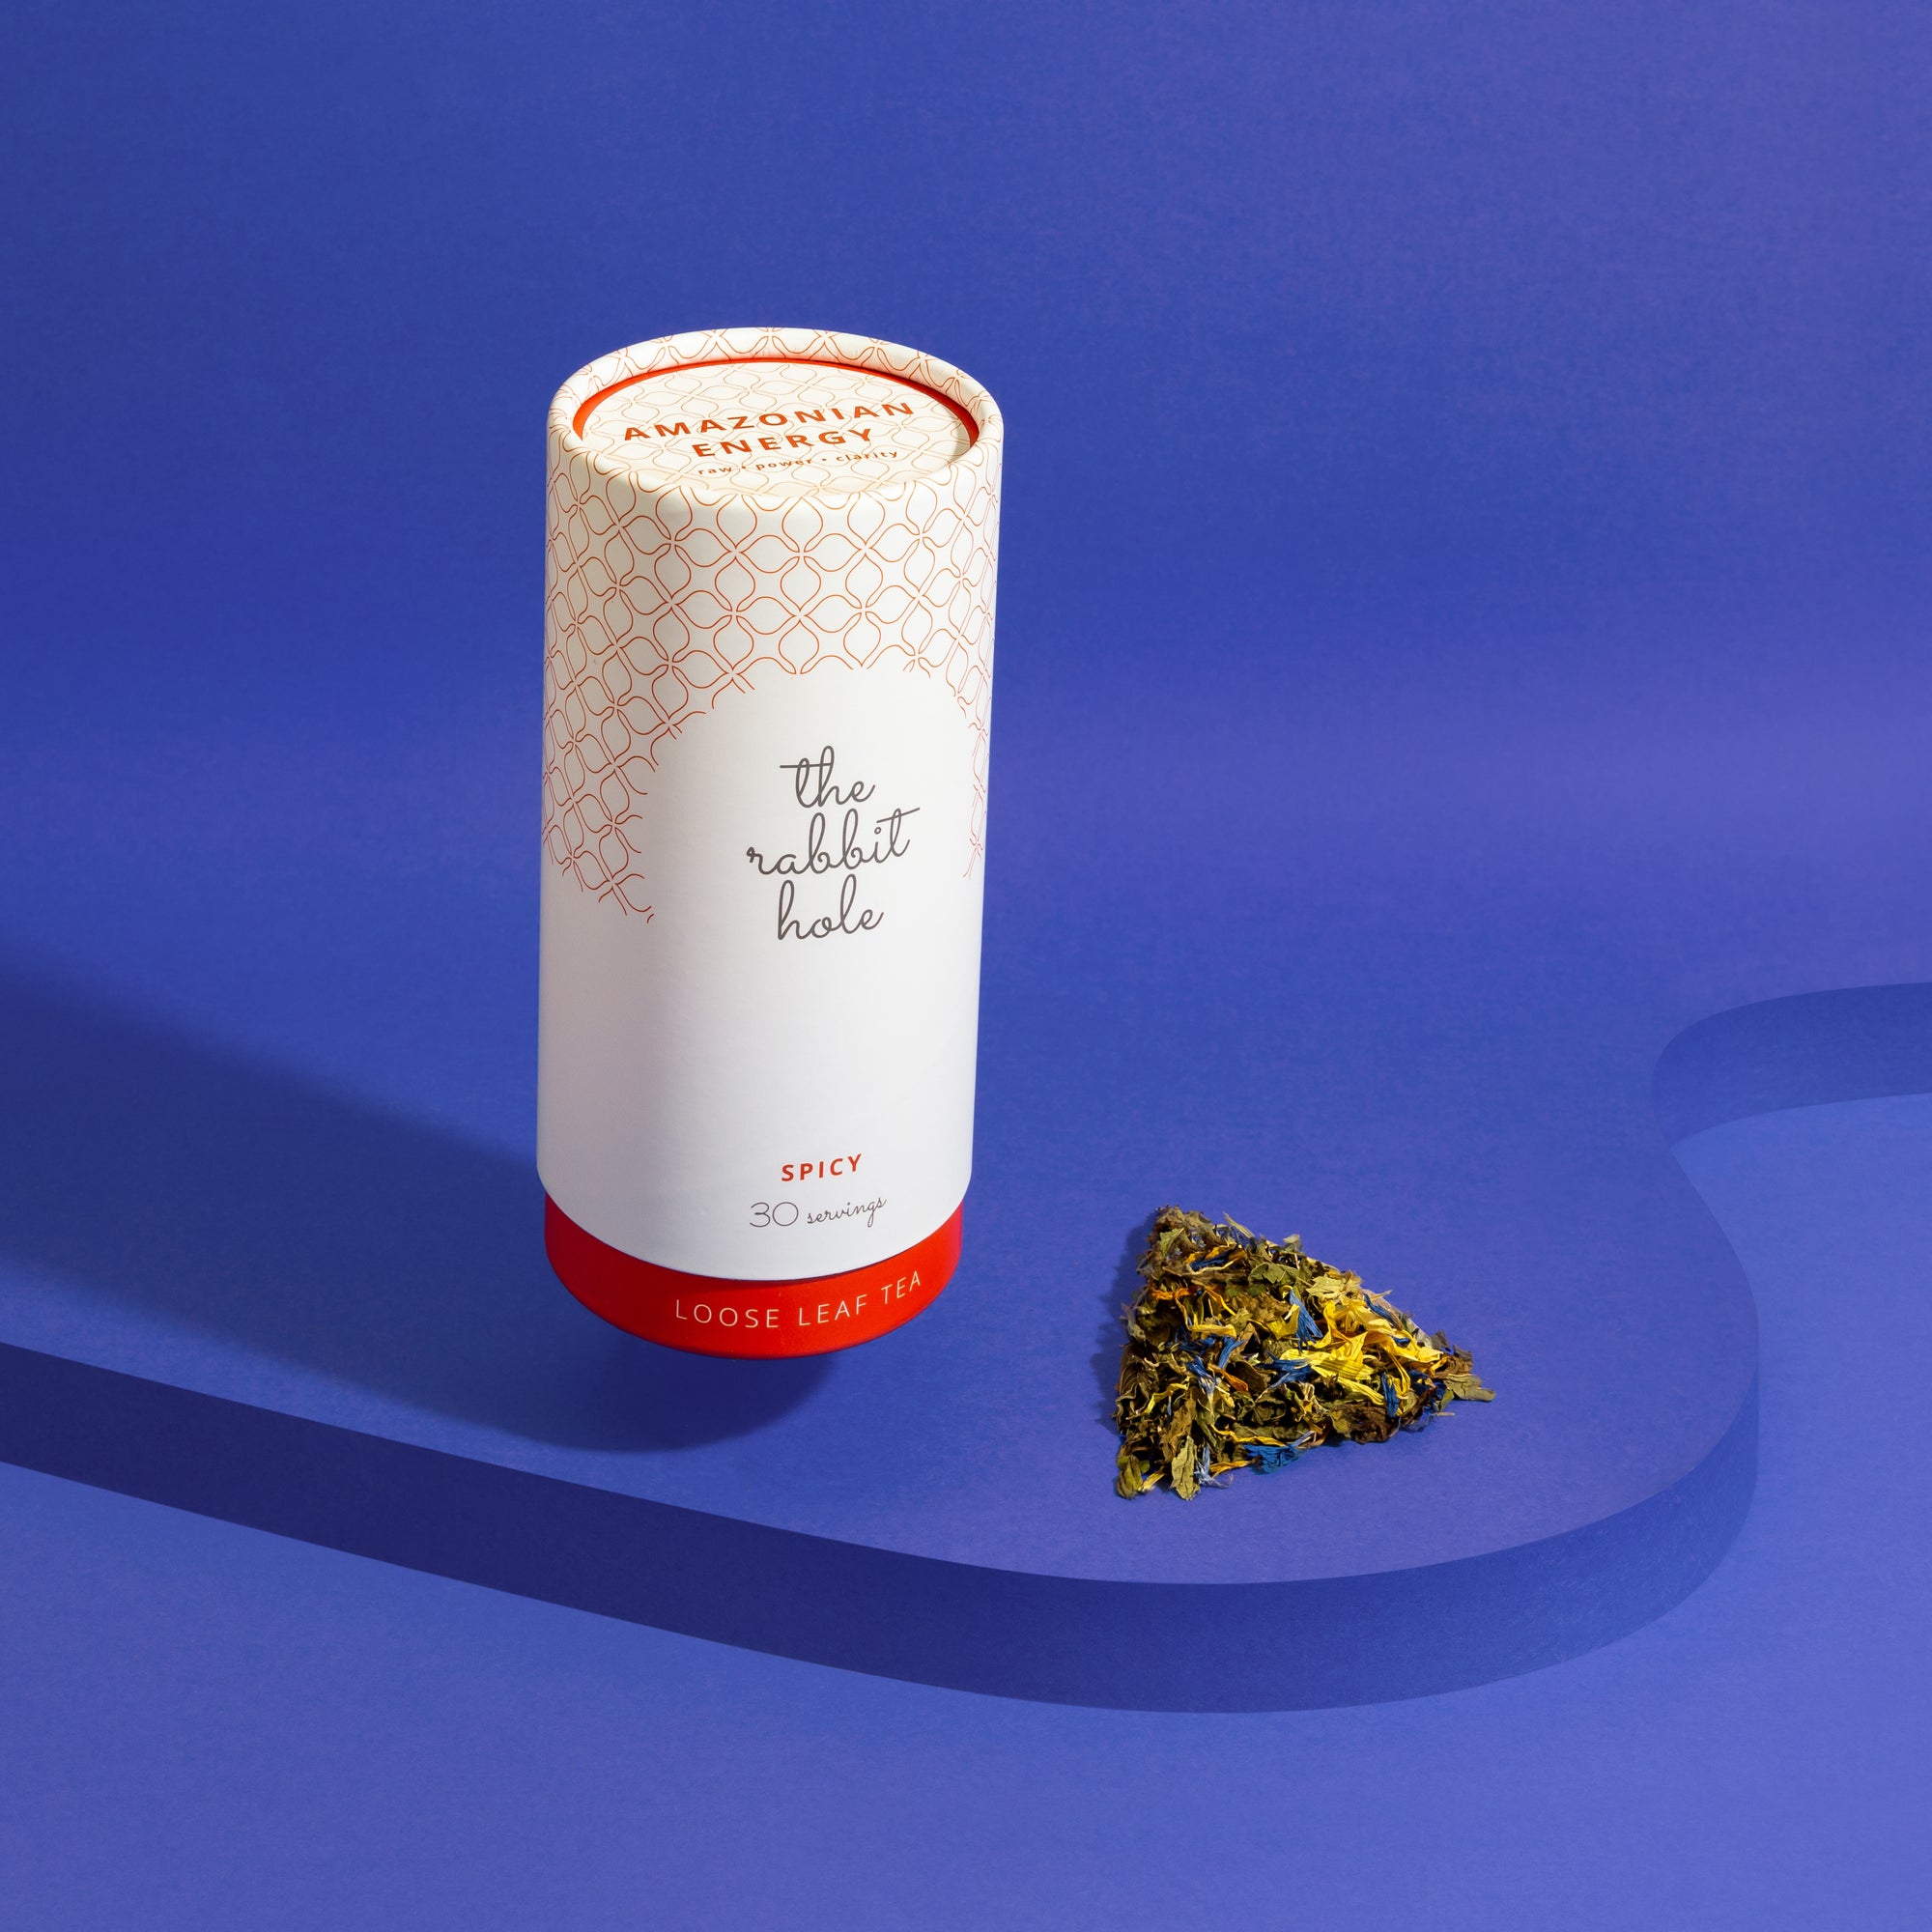 Amazonian Energy loose leaf tea by The Rabbit Hole - Australian Made Tea. Tea canister on colourful purple background